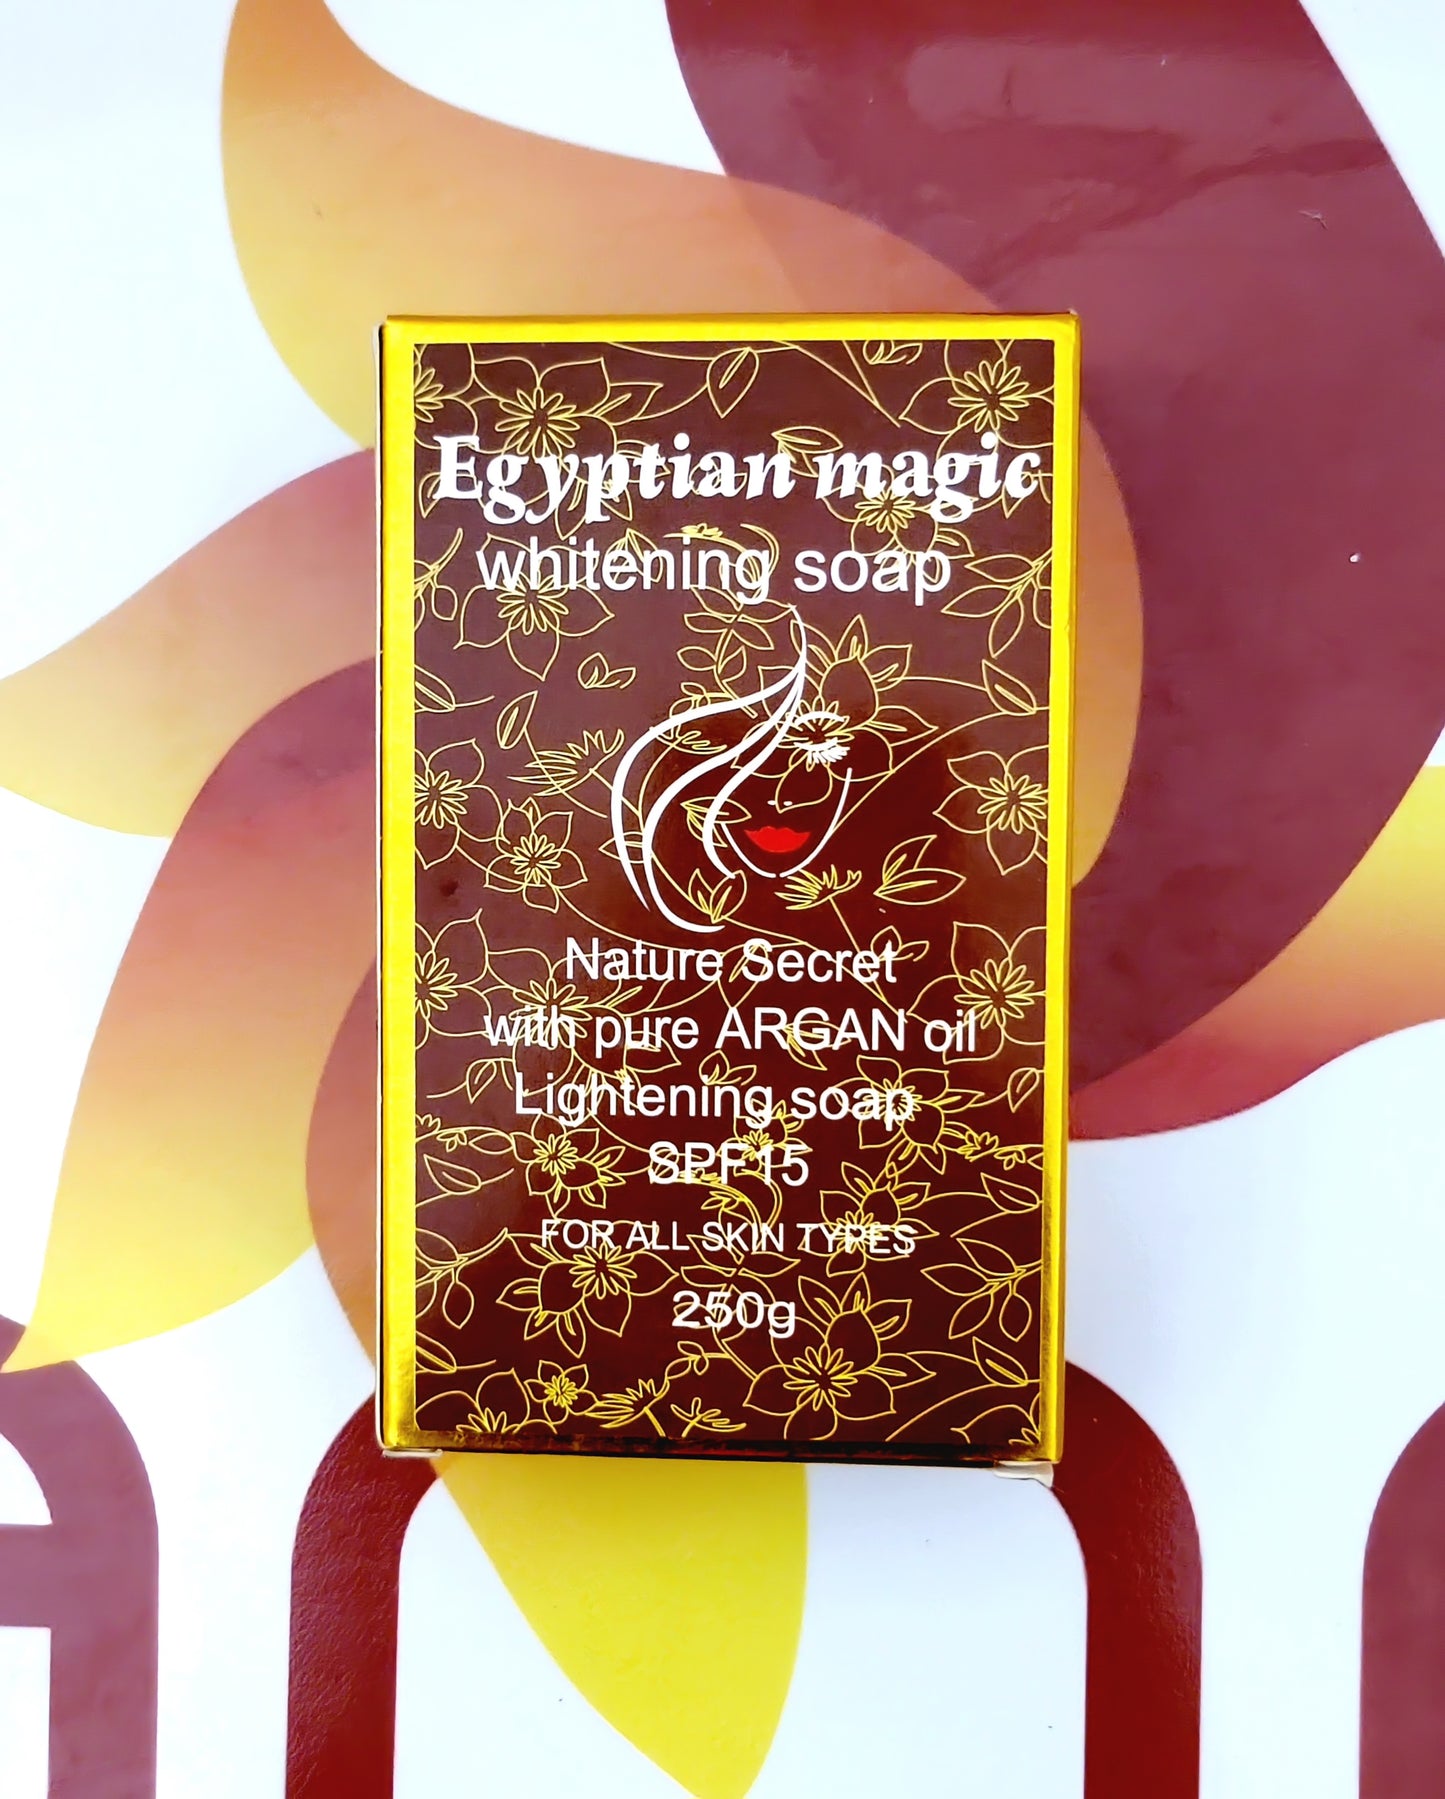 Egyptian Magic Whitening Soap 250g